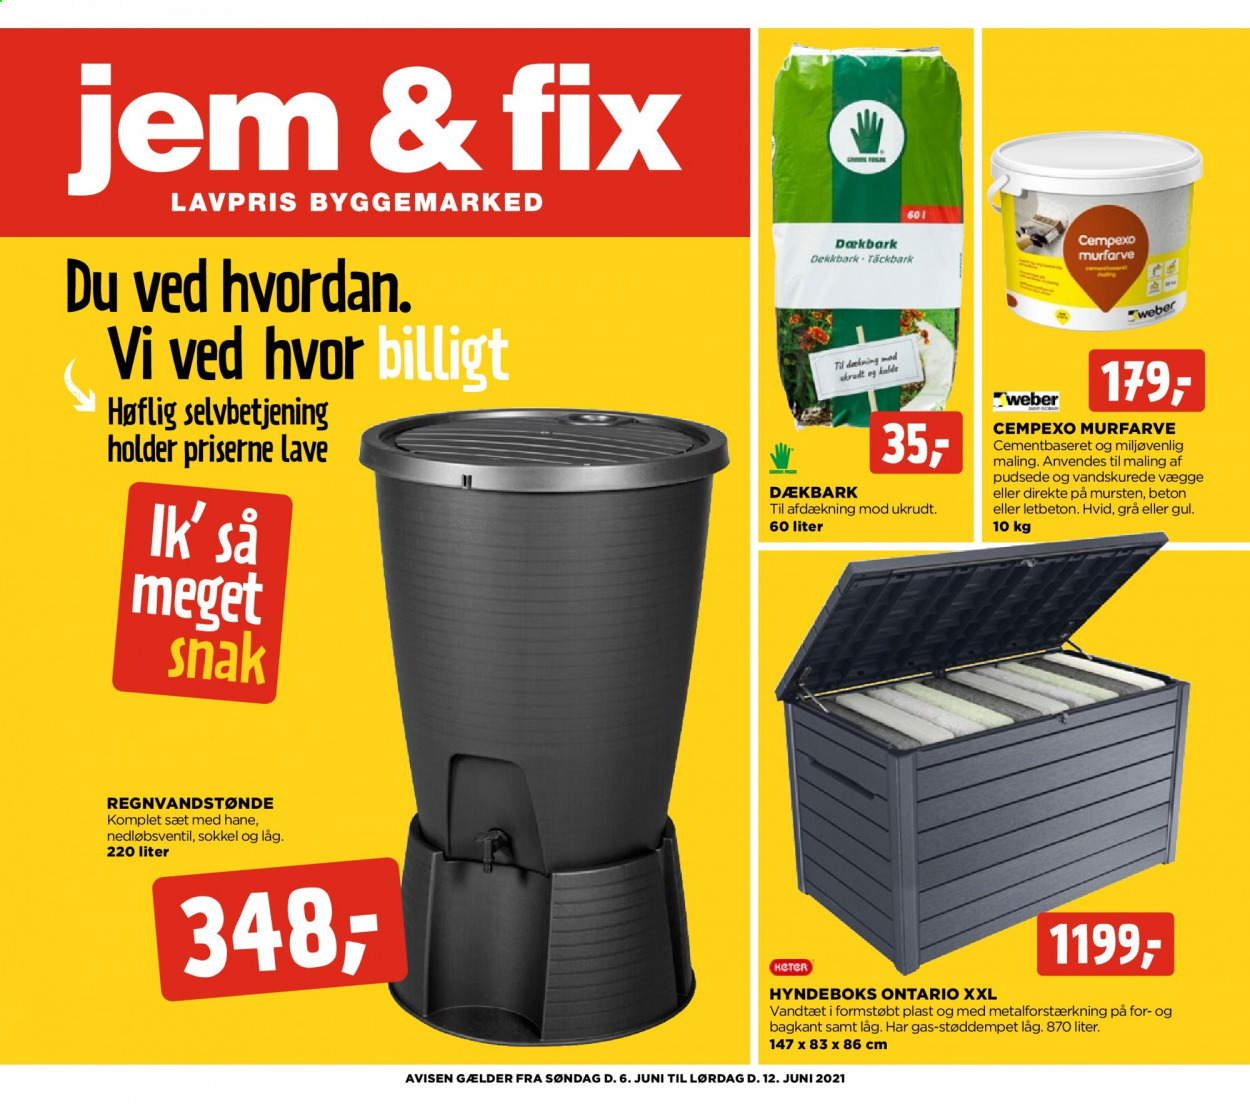 Jem & Fix tilbudsavis  - 06.06.2021 - 12.06.2021. Side 1.